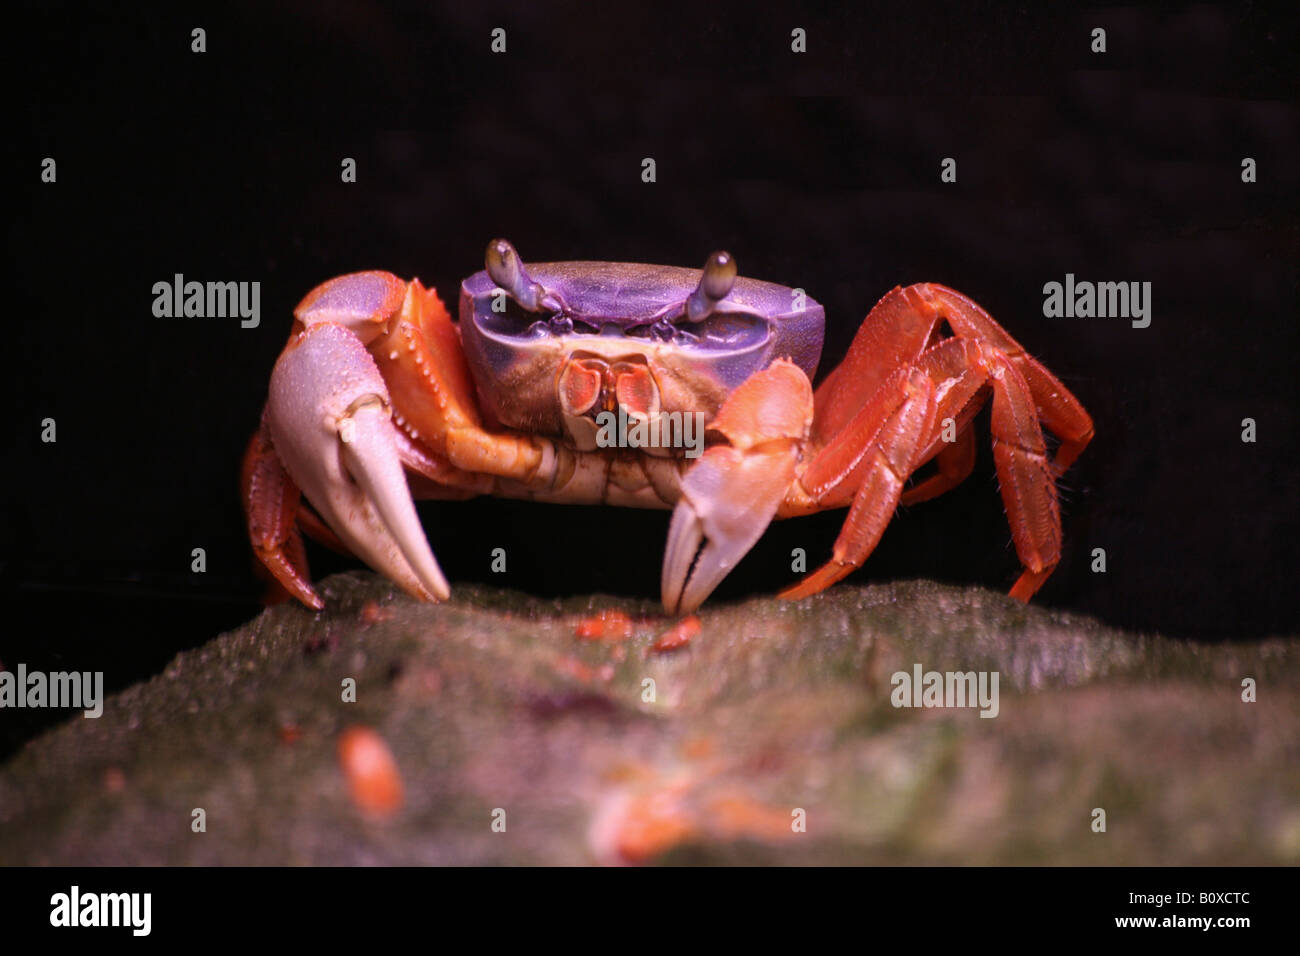 rainbow crab, West African rainbow crab (Cardisoma armatum), on rock Stock Photo